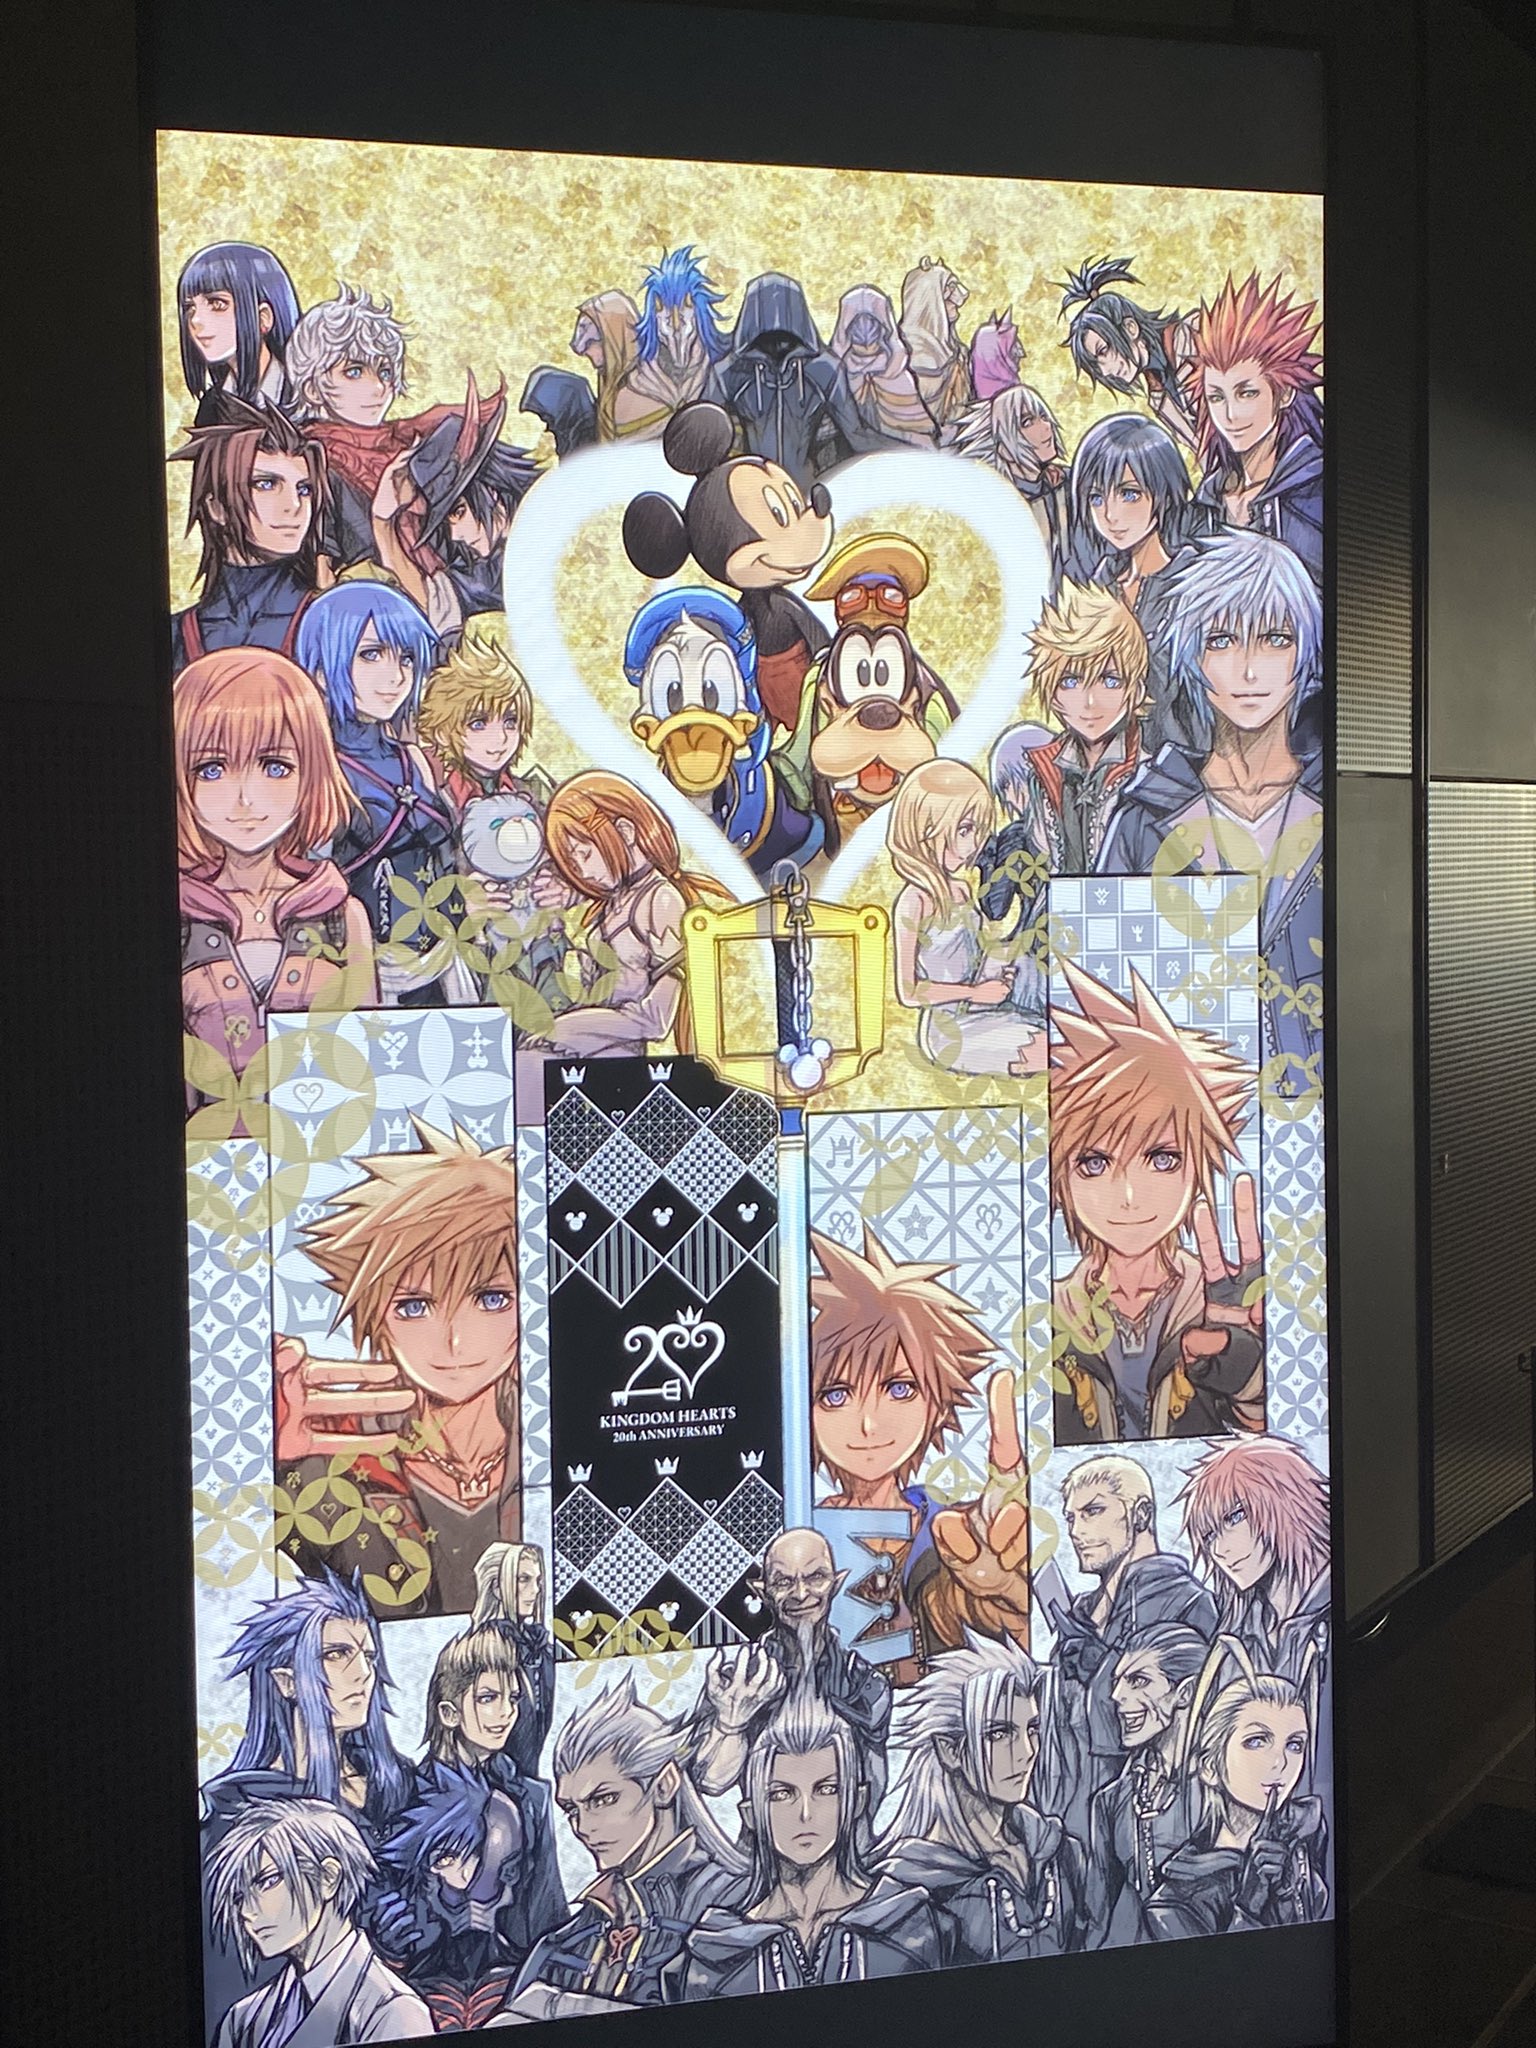 New Kingdom Hearts 20-Year Anniversary Artwork Revealed